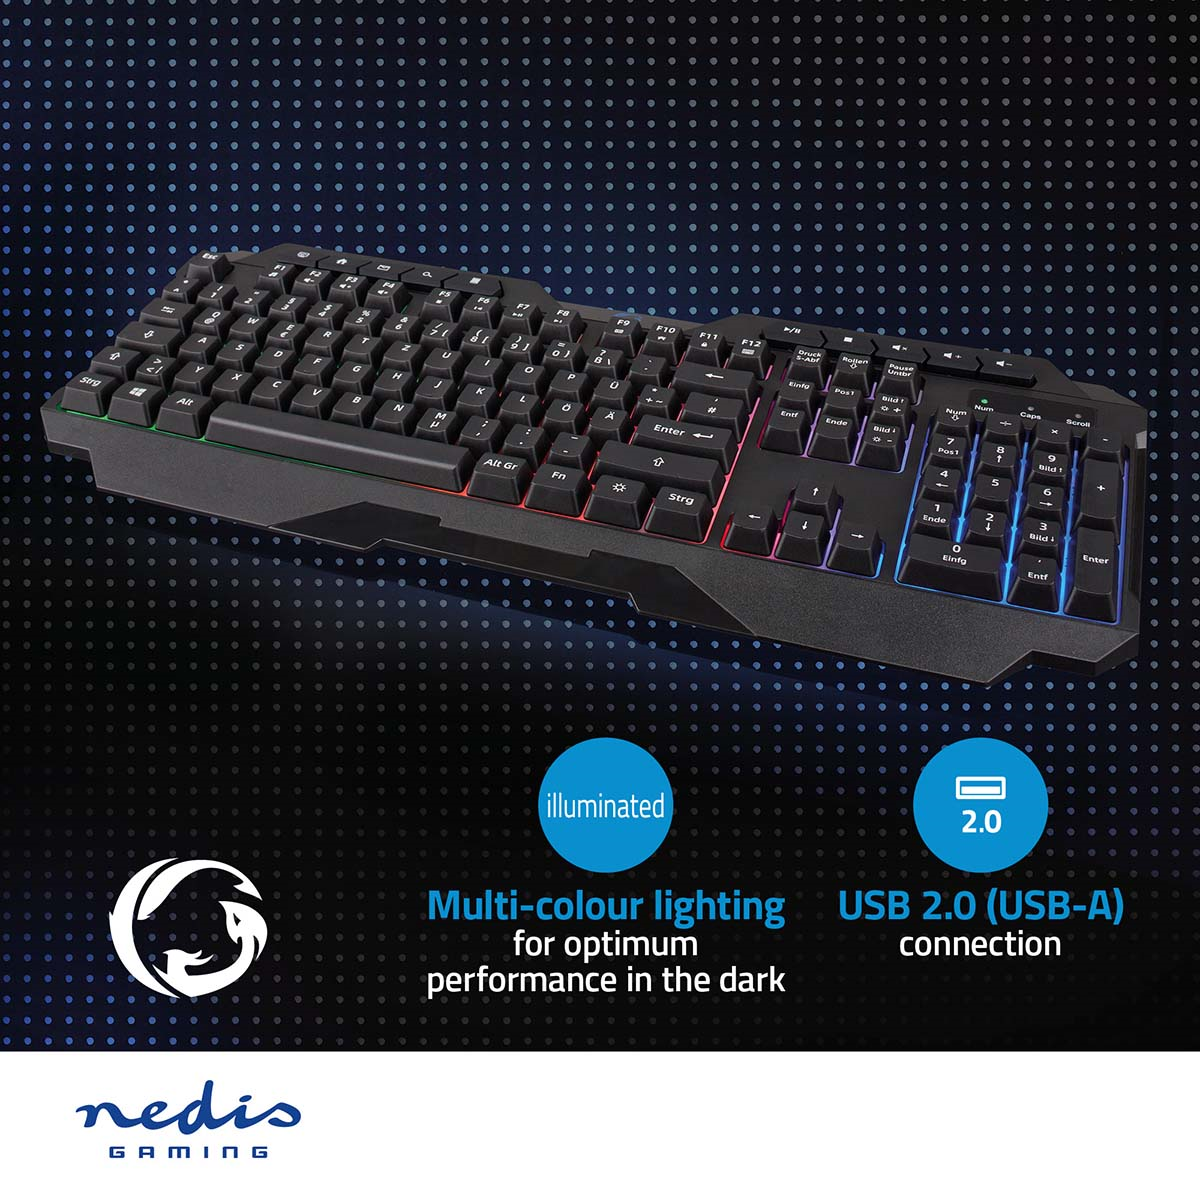 Nedis GKBD110BKDE Wired Gaming Keyboard USB Type-A | Folientasten | LED | QWERTZ | DE-Layout 